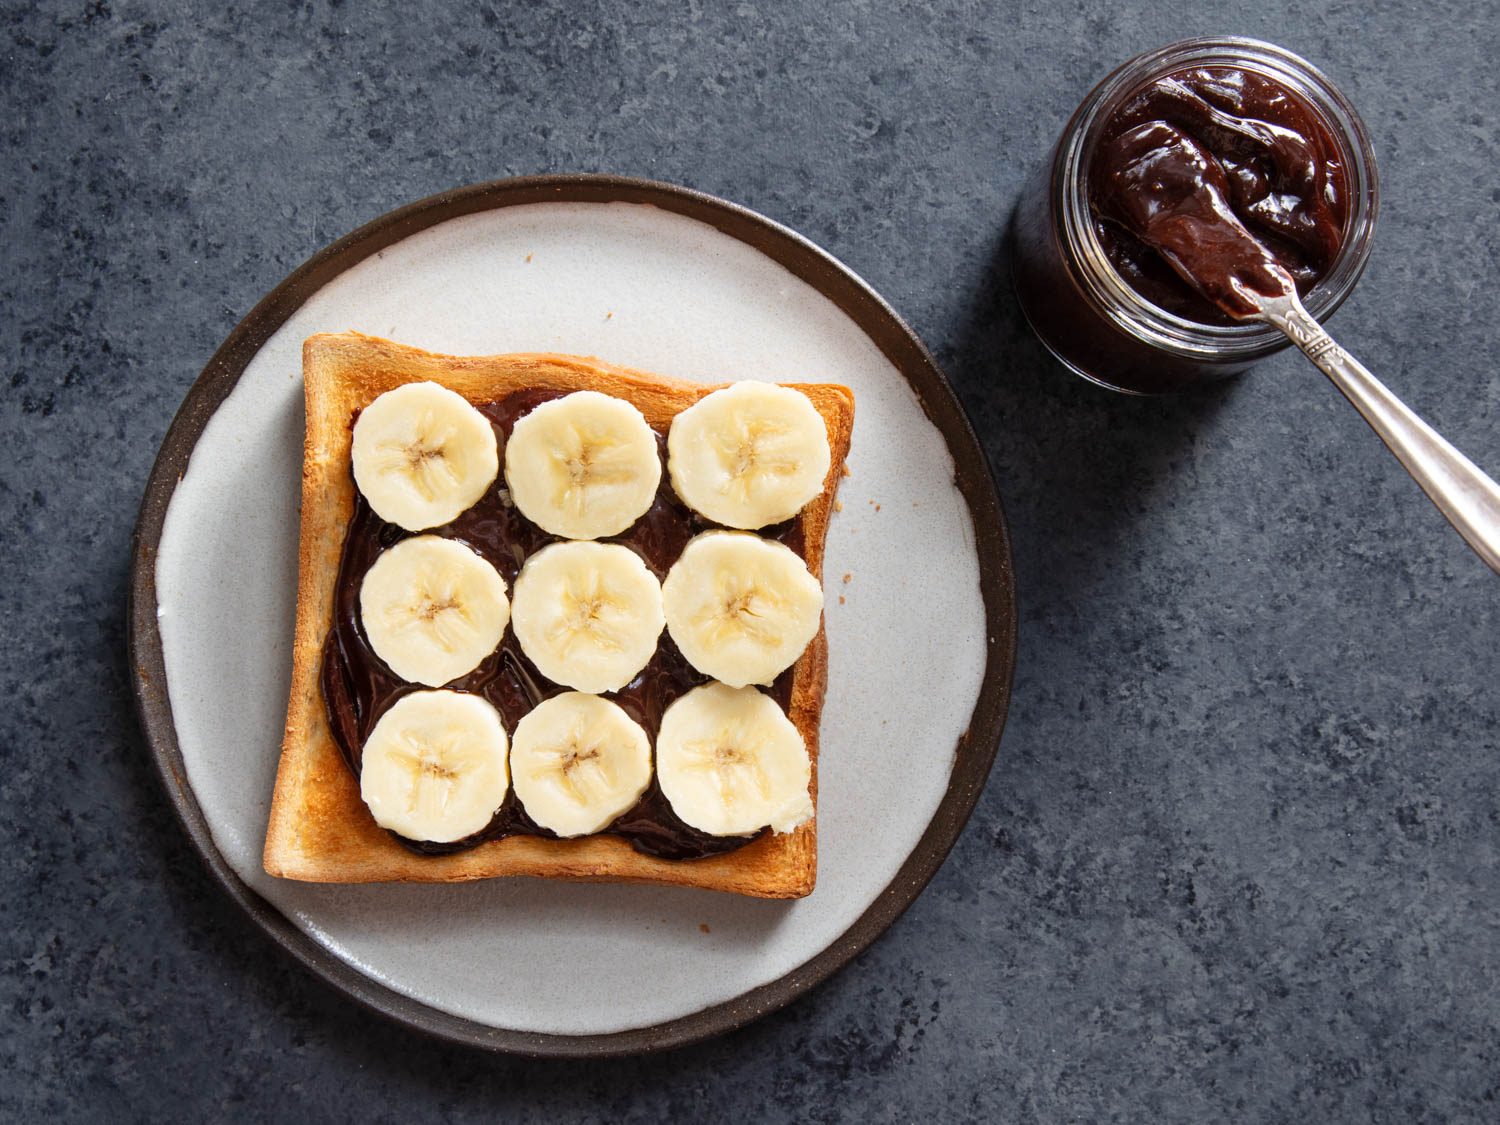 chocolate hazelnut toast with bananas